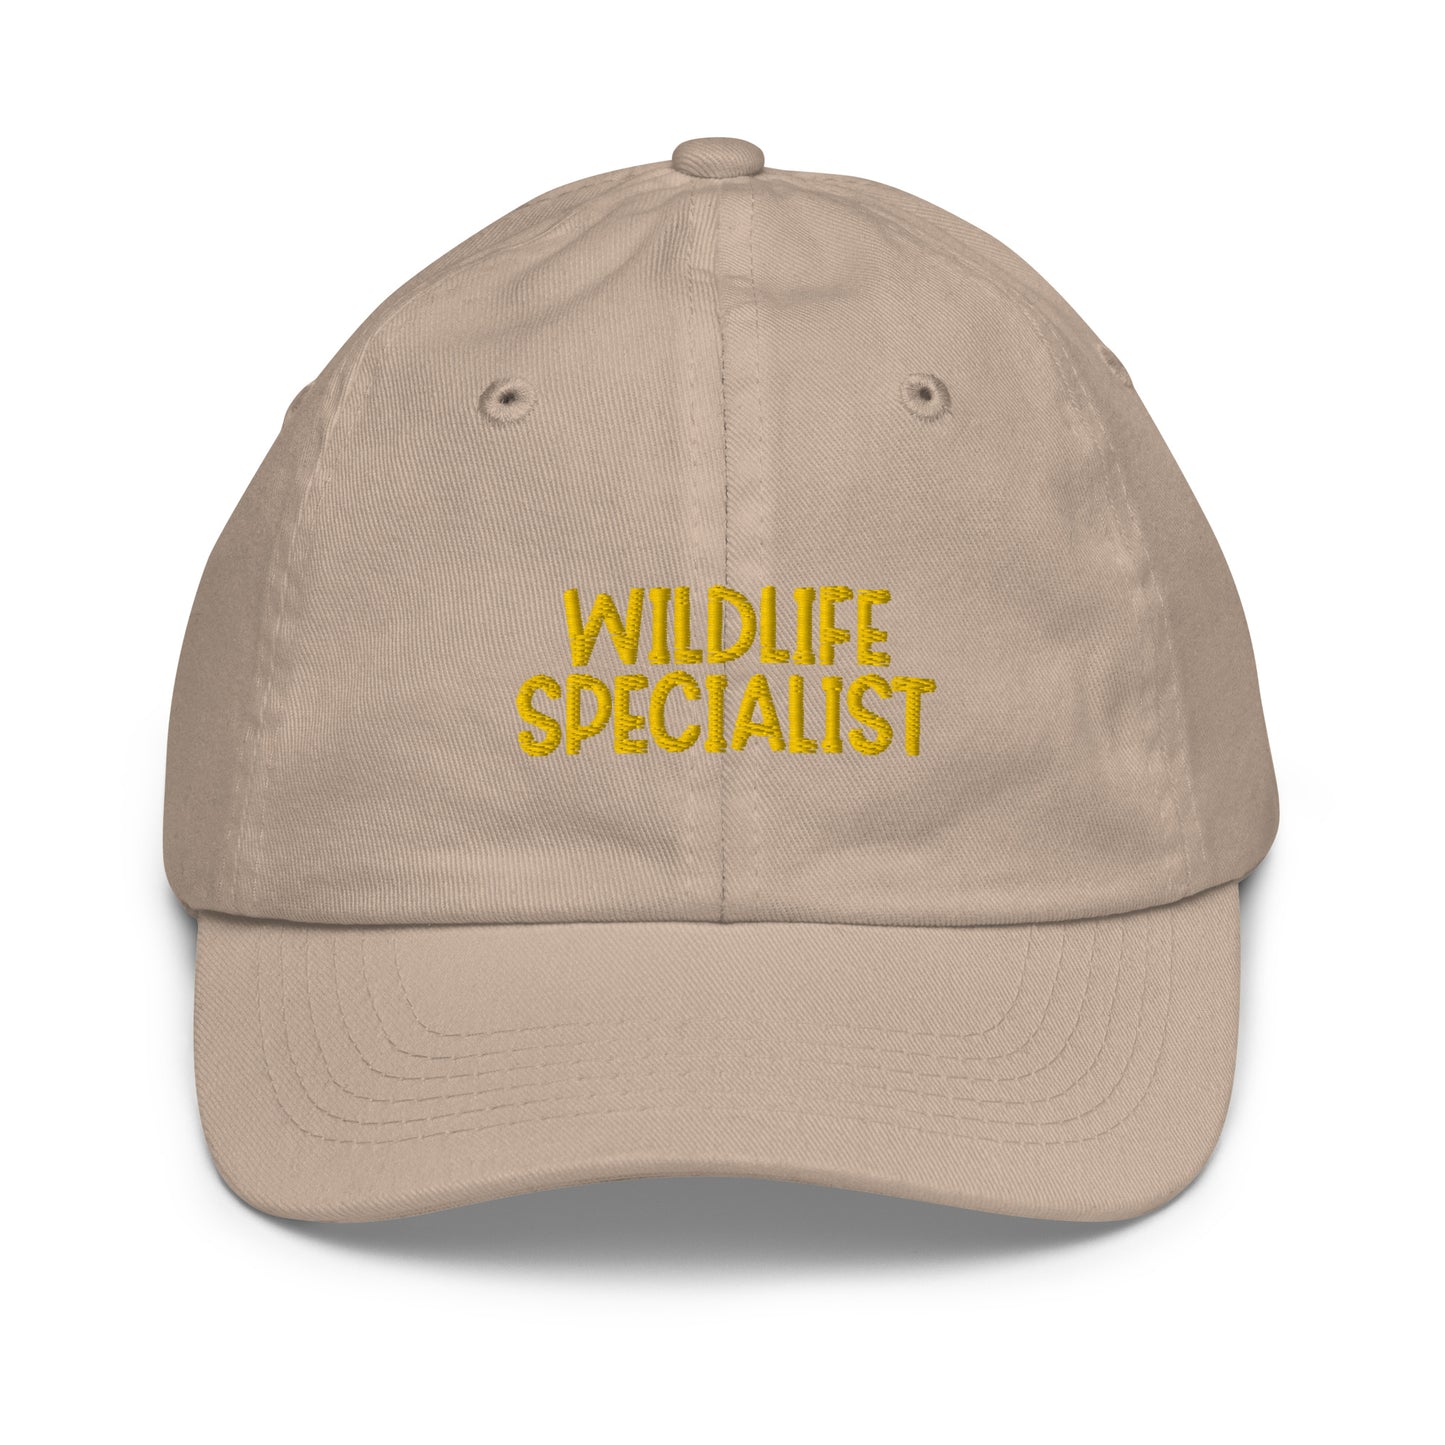 Wildlife Specialist Youth Baseball Cap